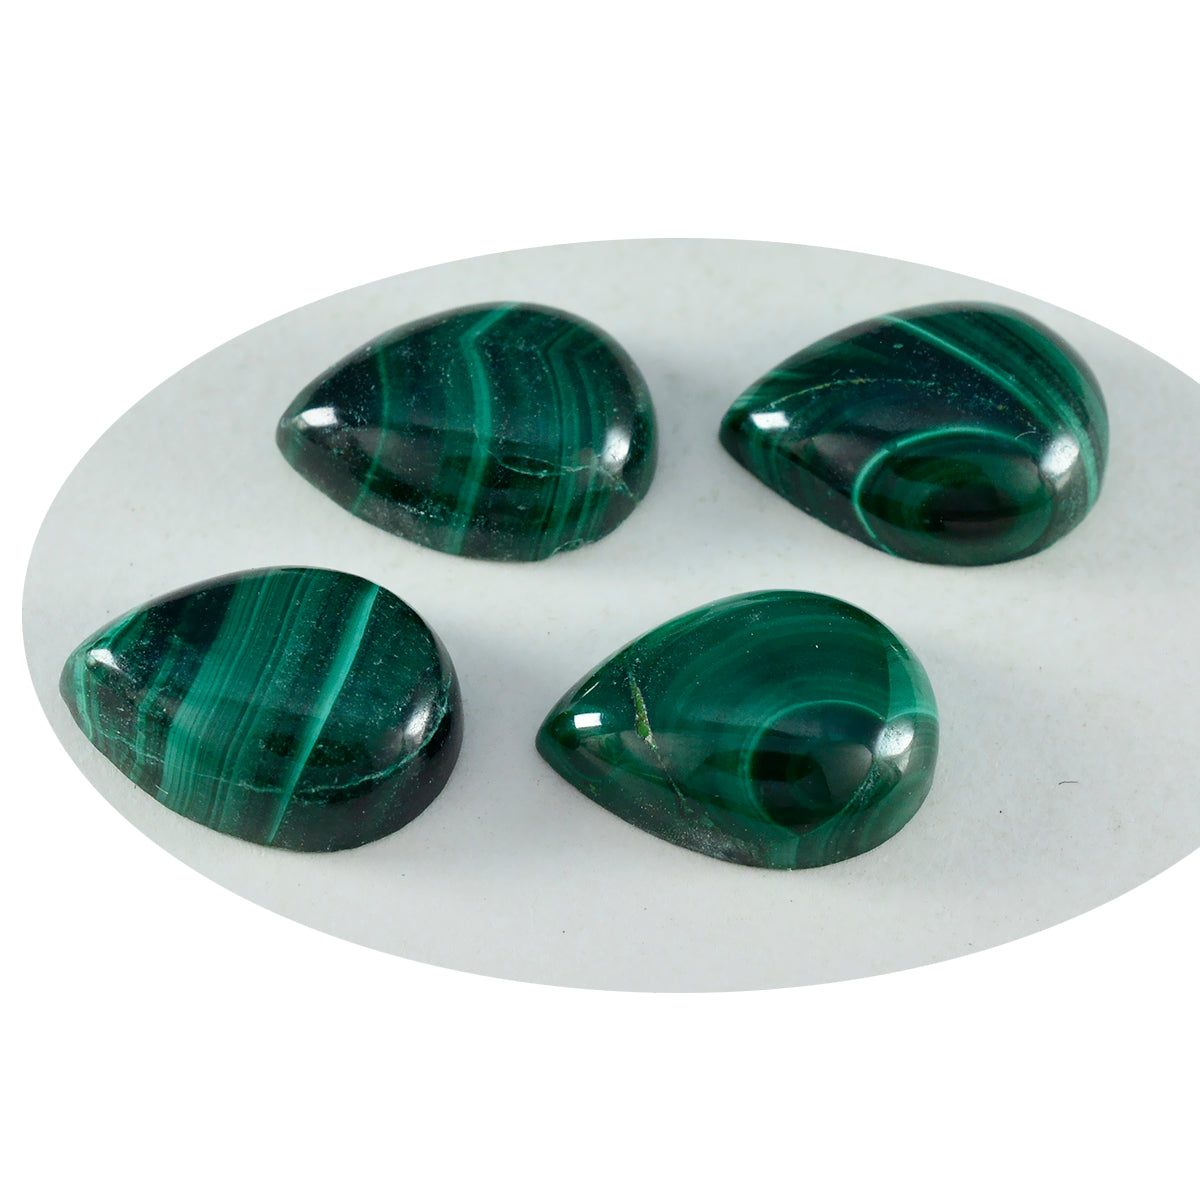 Riyogems 1PC Green Malachite Cabochon 10x14 mm Pear Shape attractive Quality Loose Gemstone